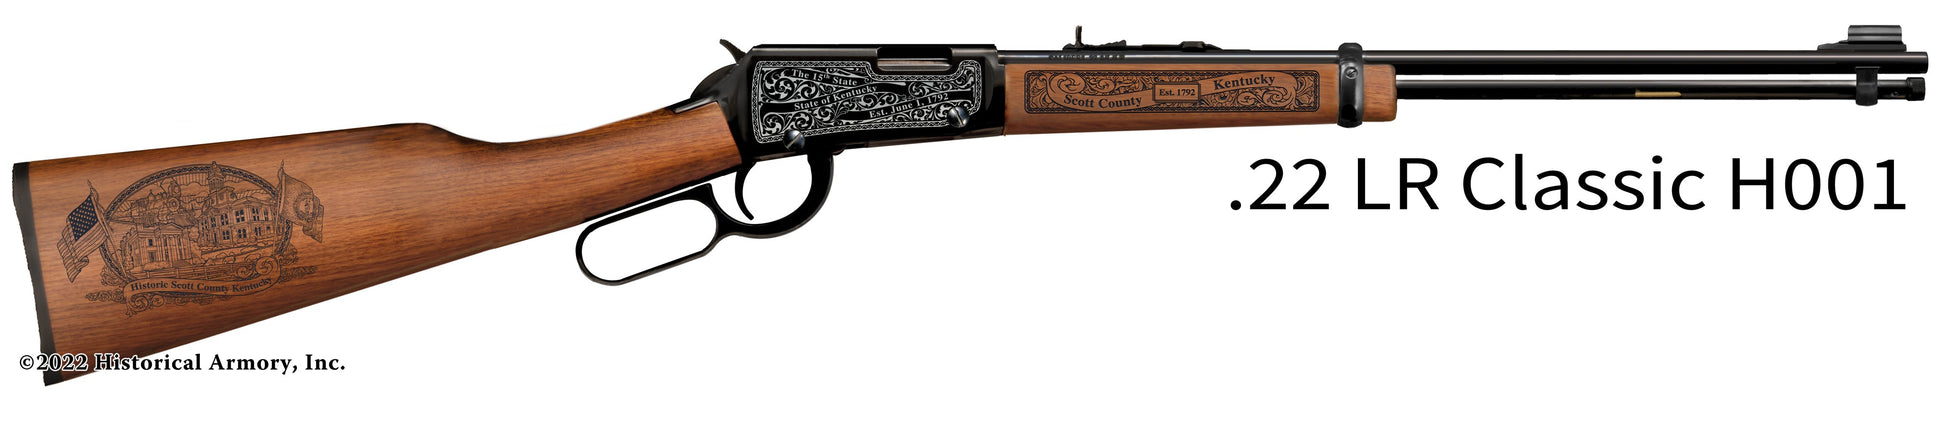 Scott County Kentucky Engraved Henry H001 Rifle